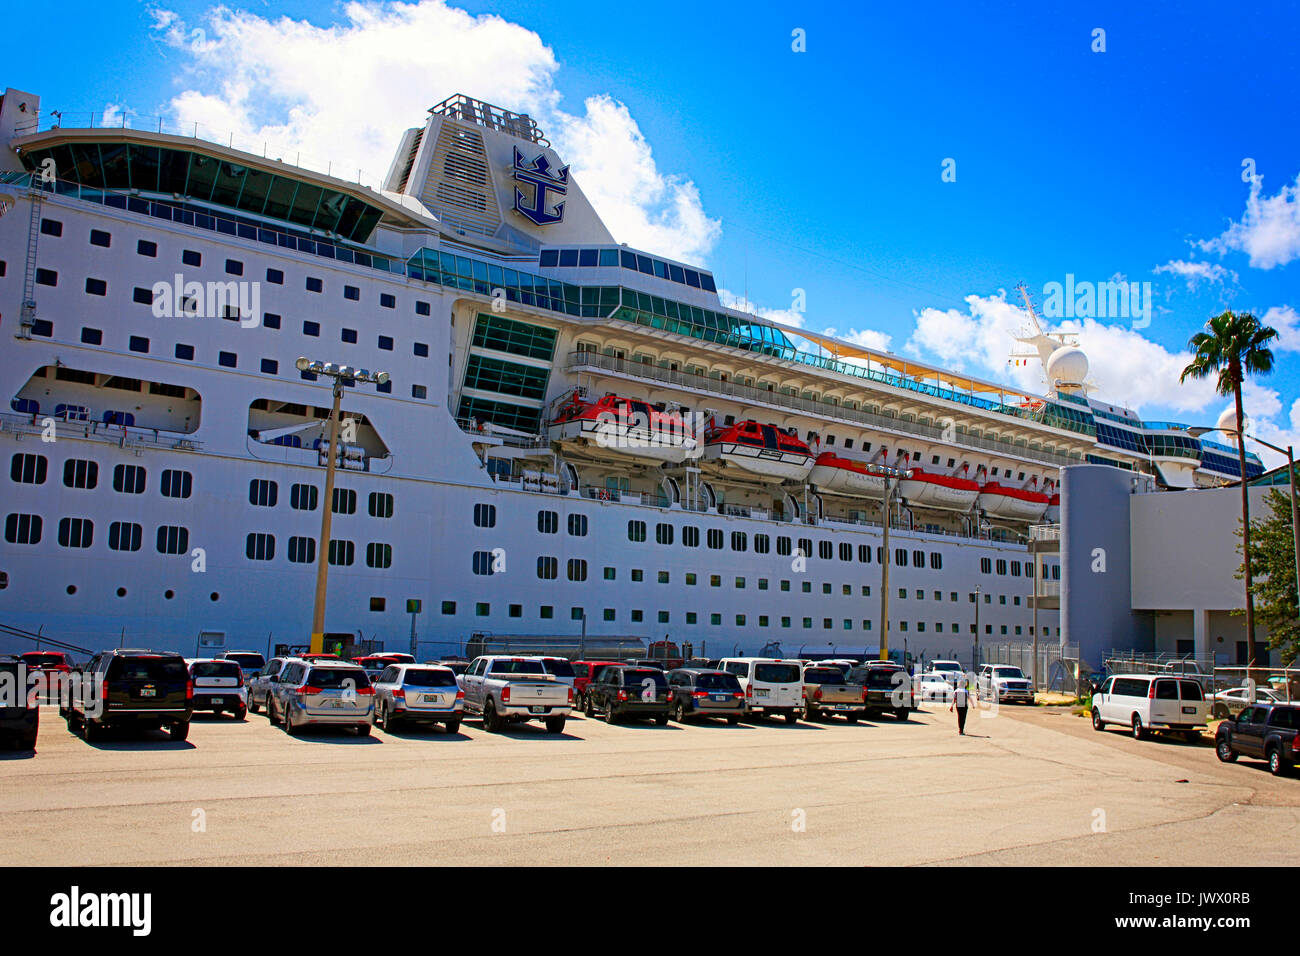 Empress of the Sea cruise ship at Port Tampa Bay FL, USA Stock Photo